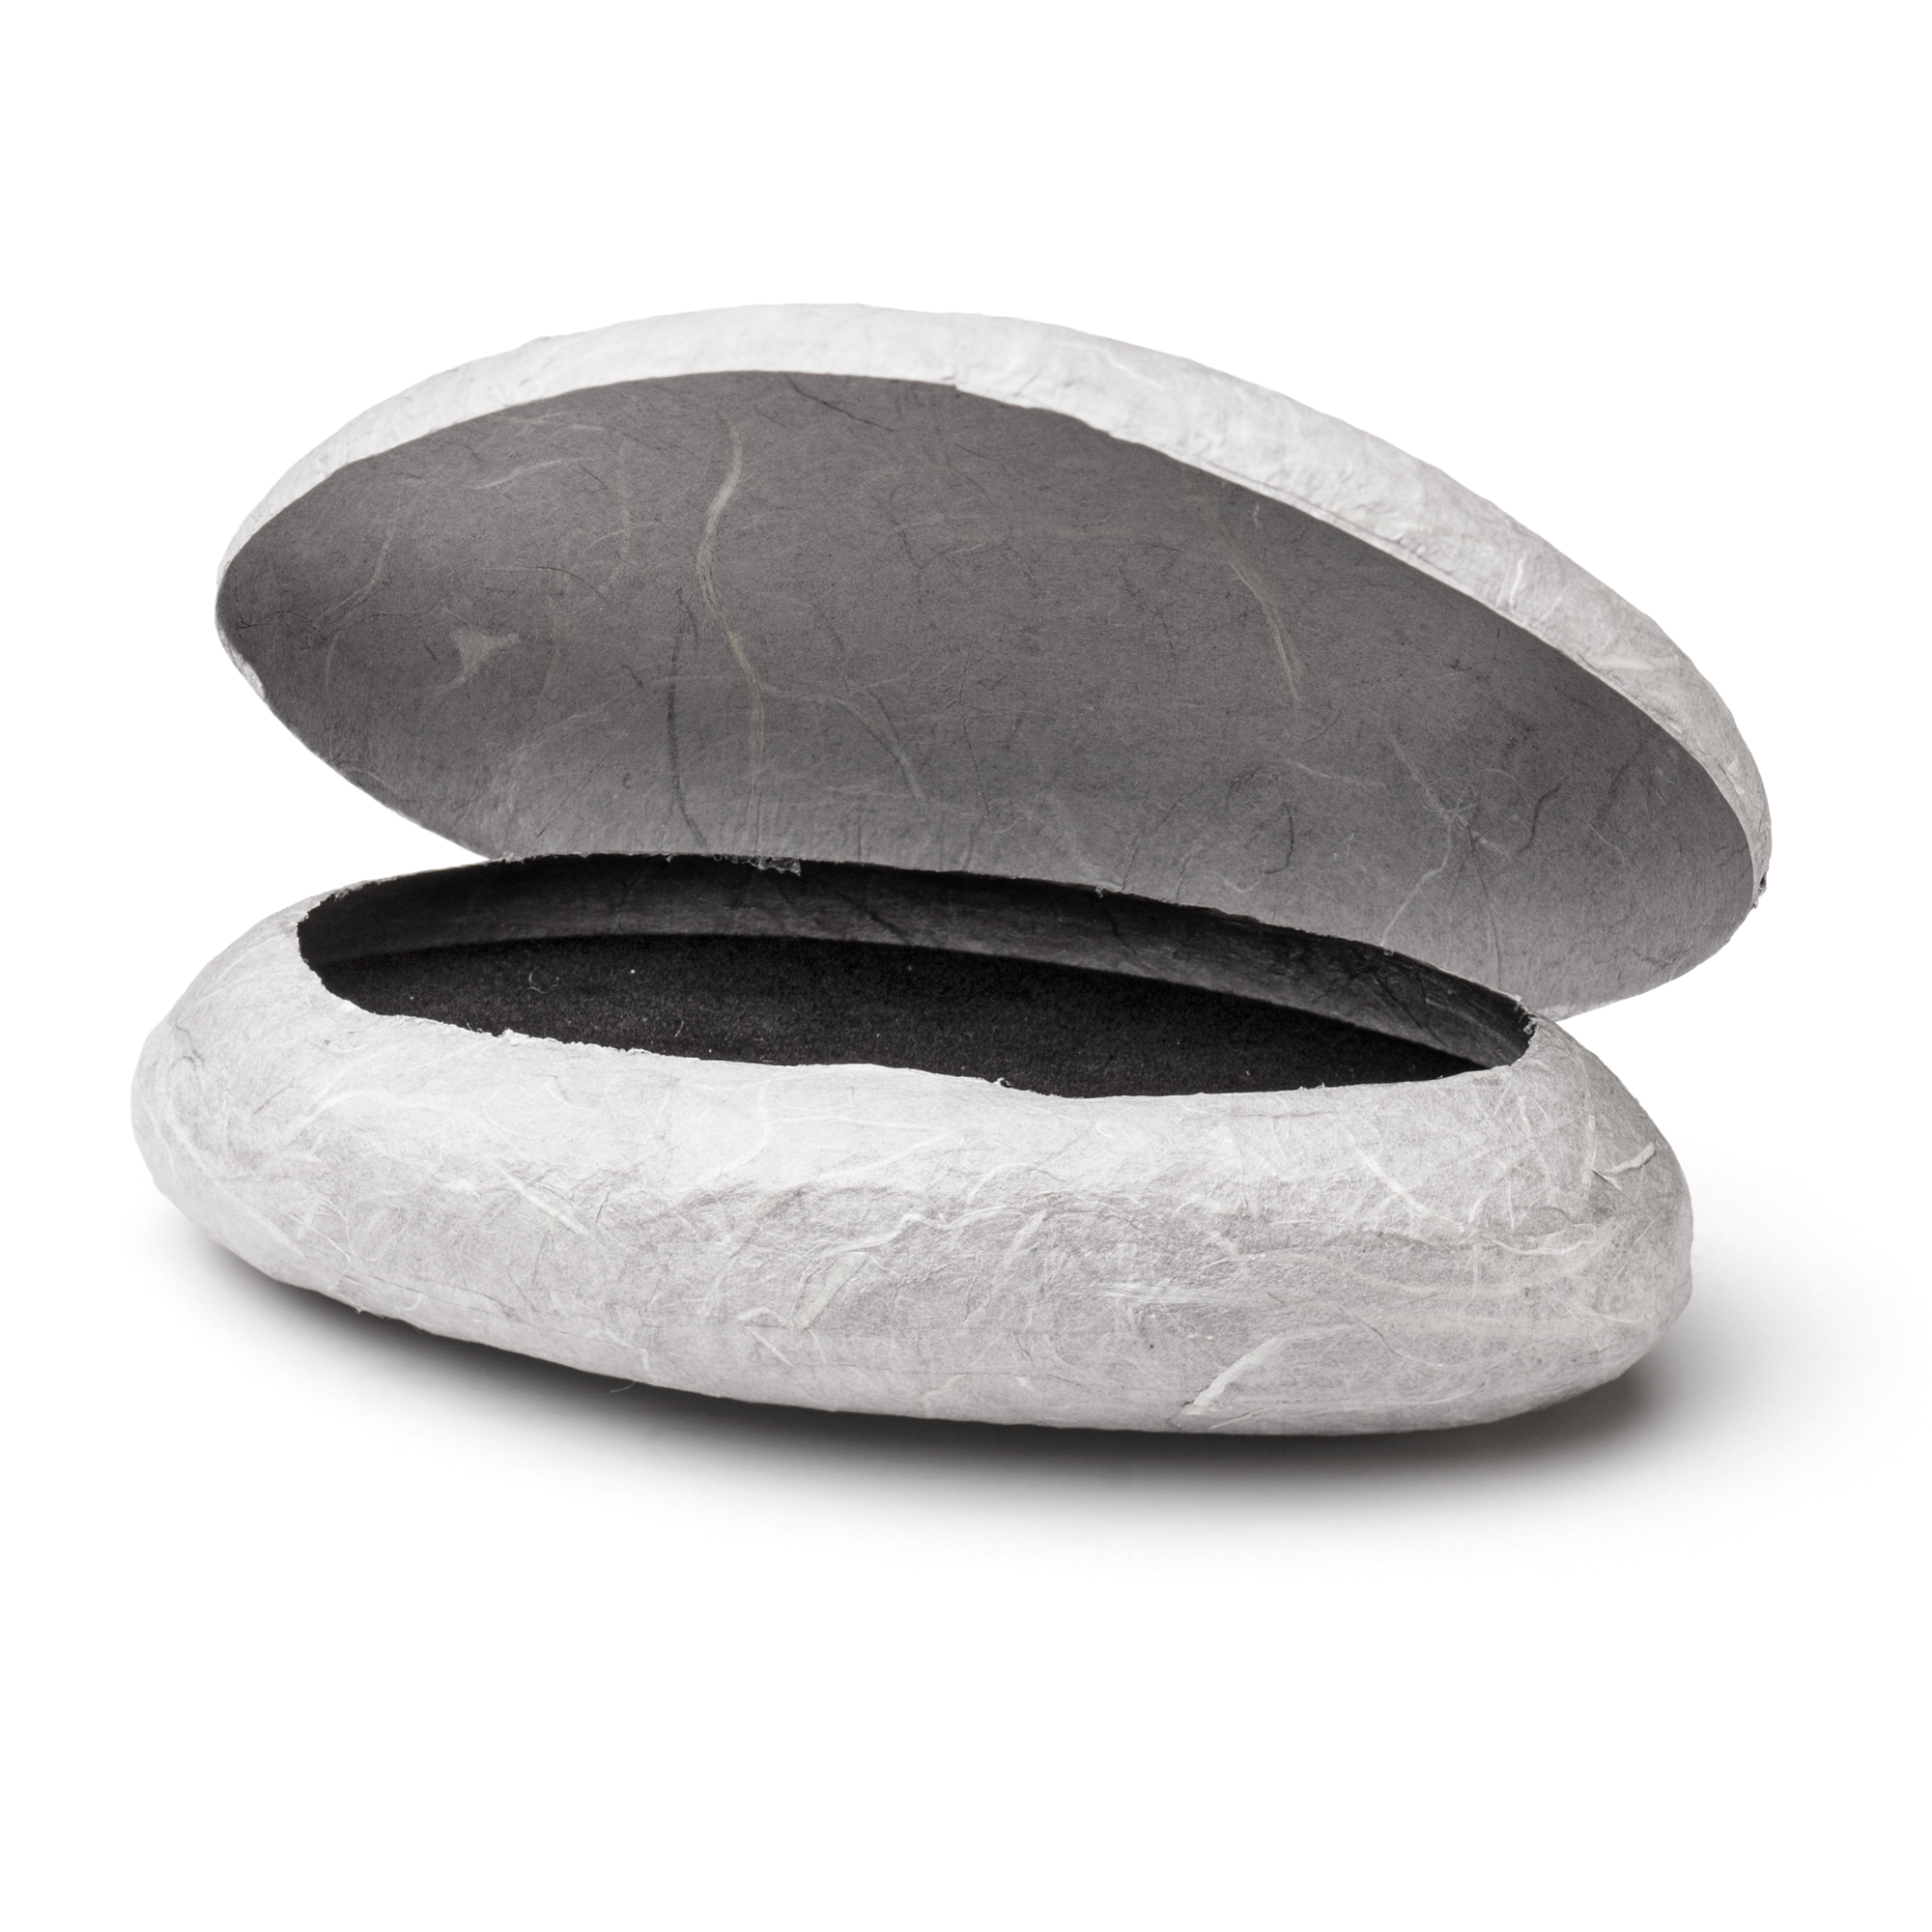 Stone large, 150 x 100 x 45 mm, grey